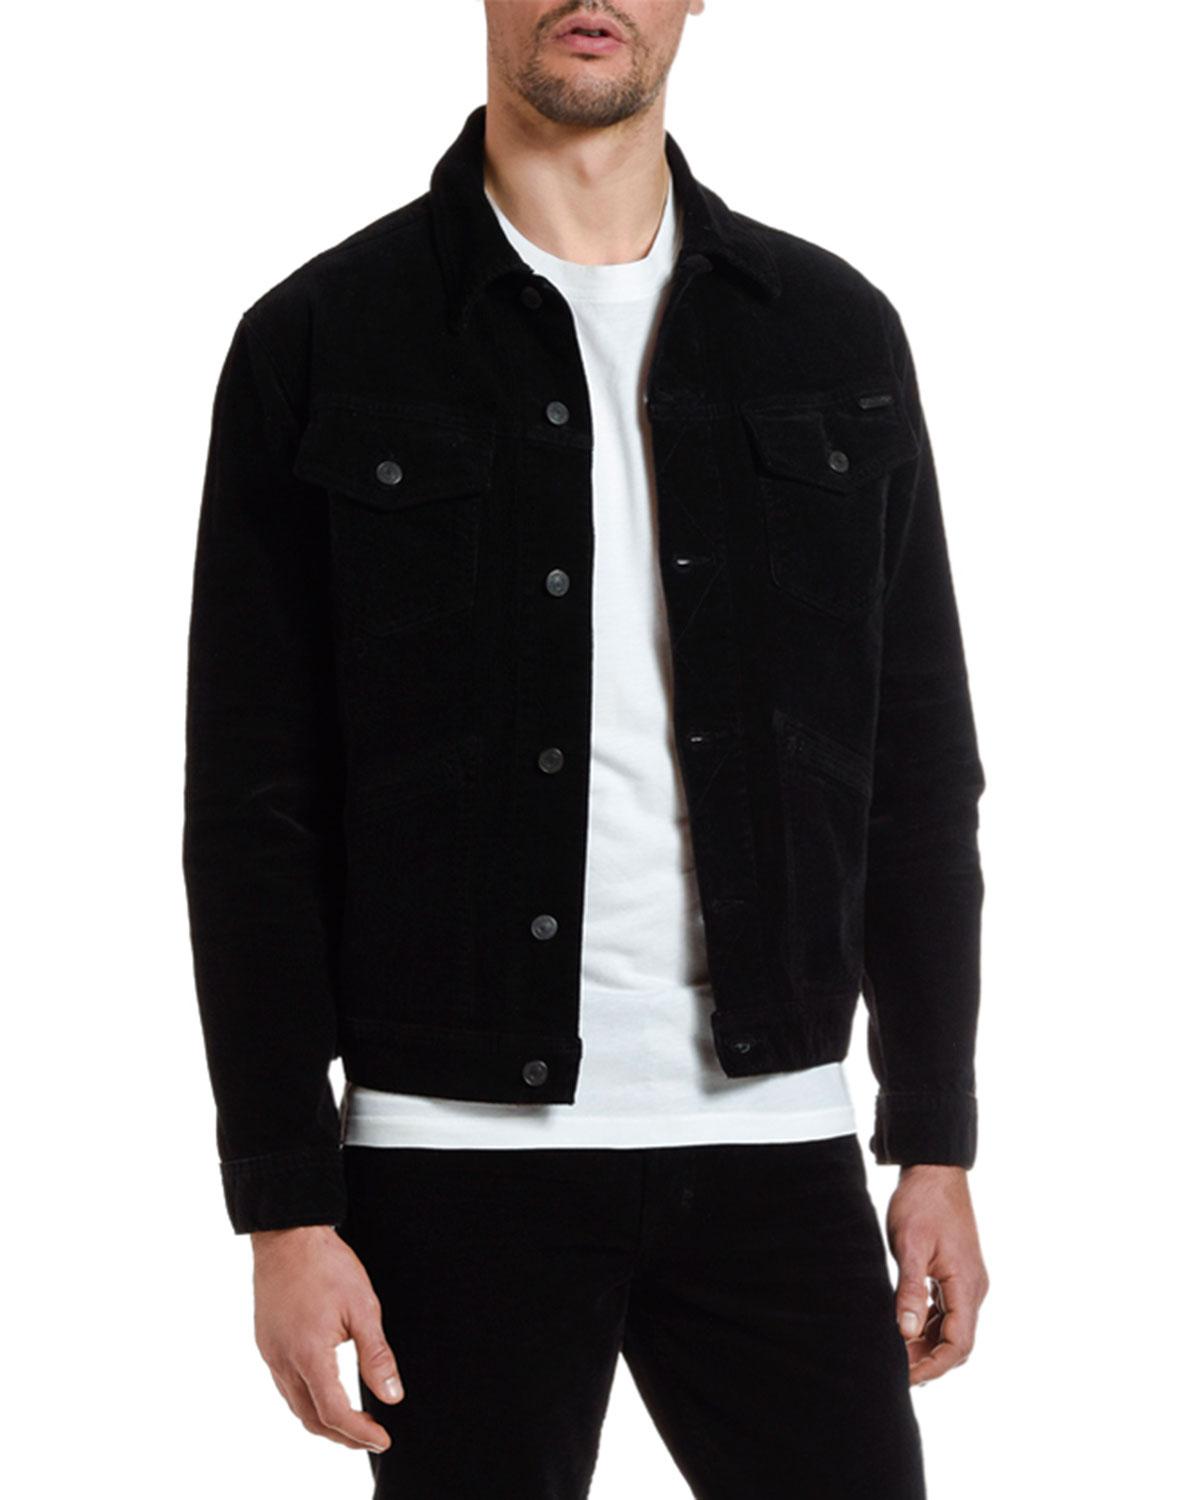 Tom Ford Men's Iconic Corduroy Denim Jacket in Black for Men - Lyst